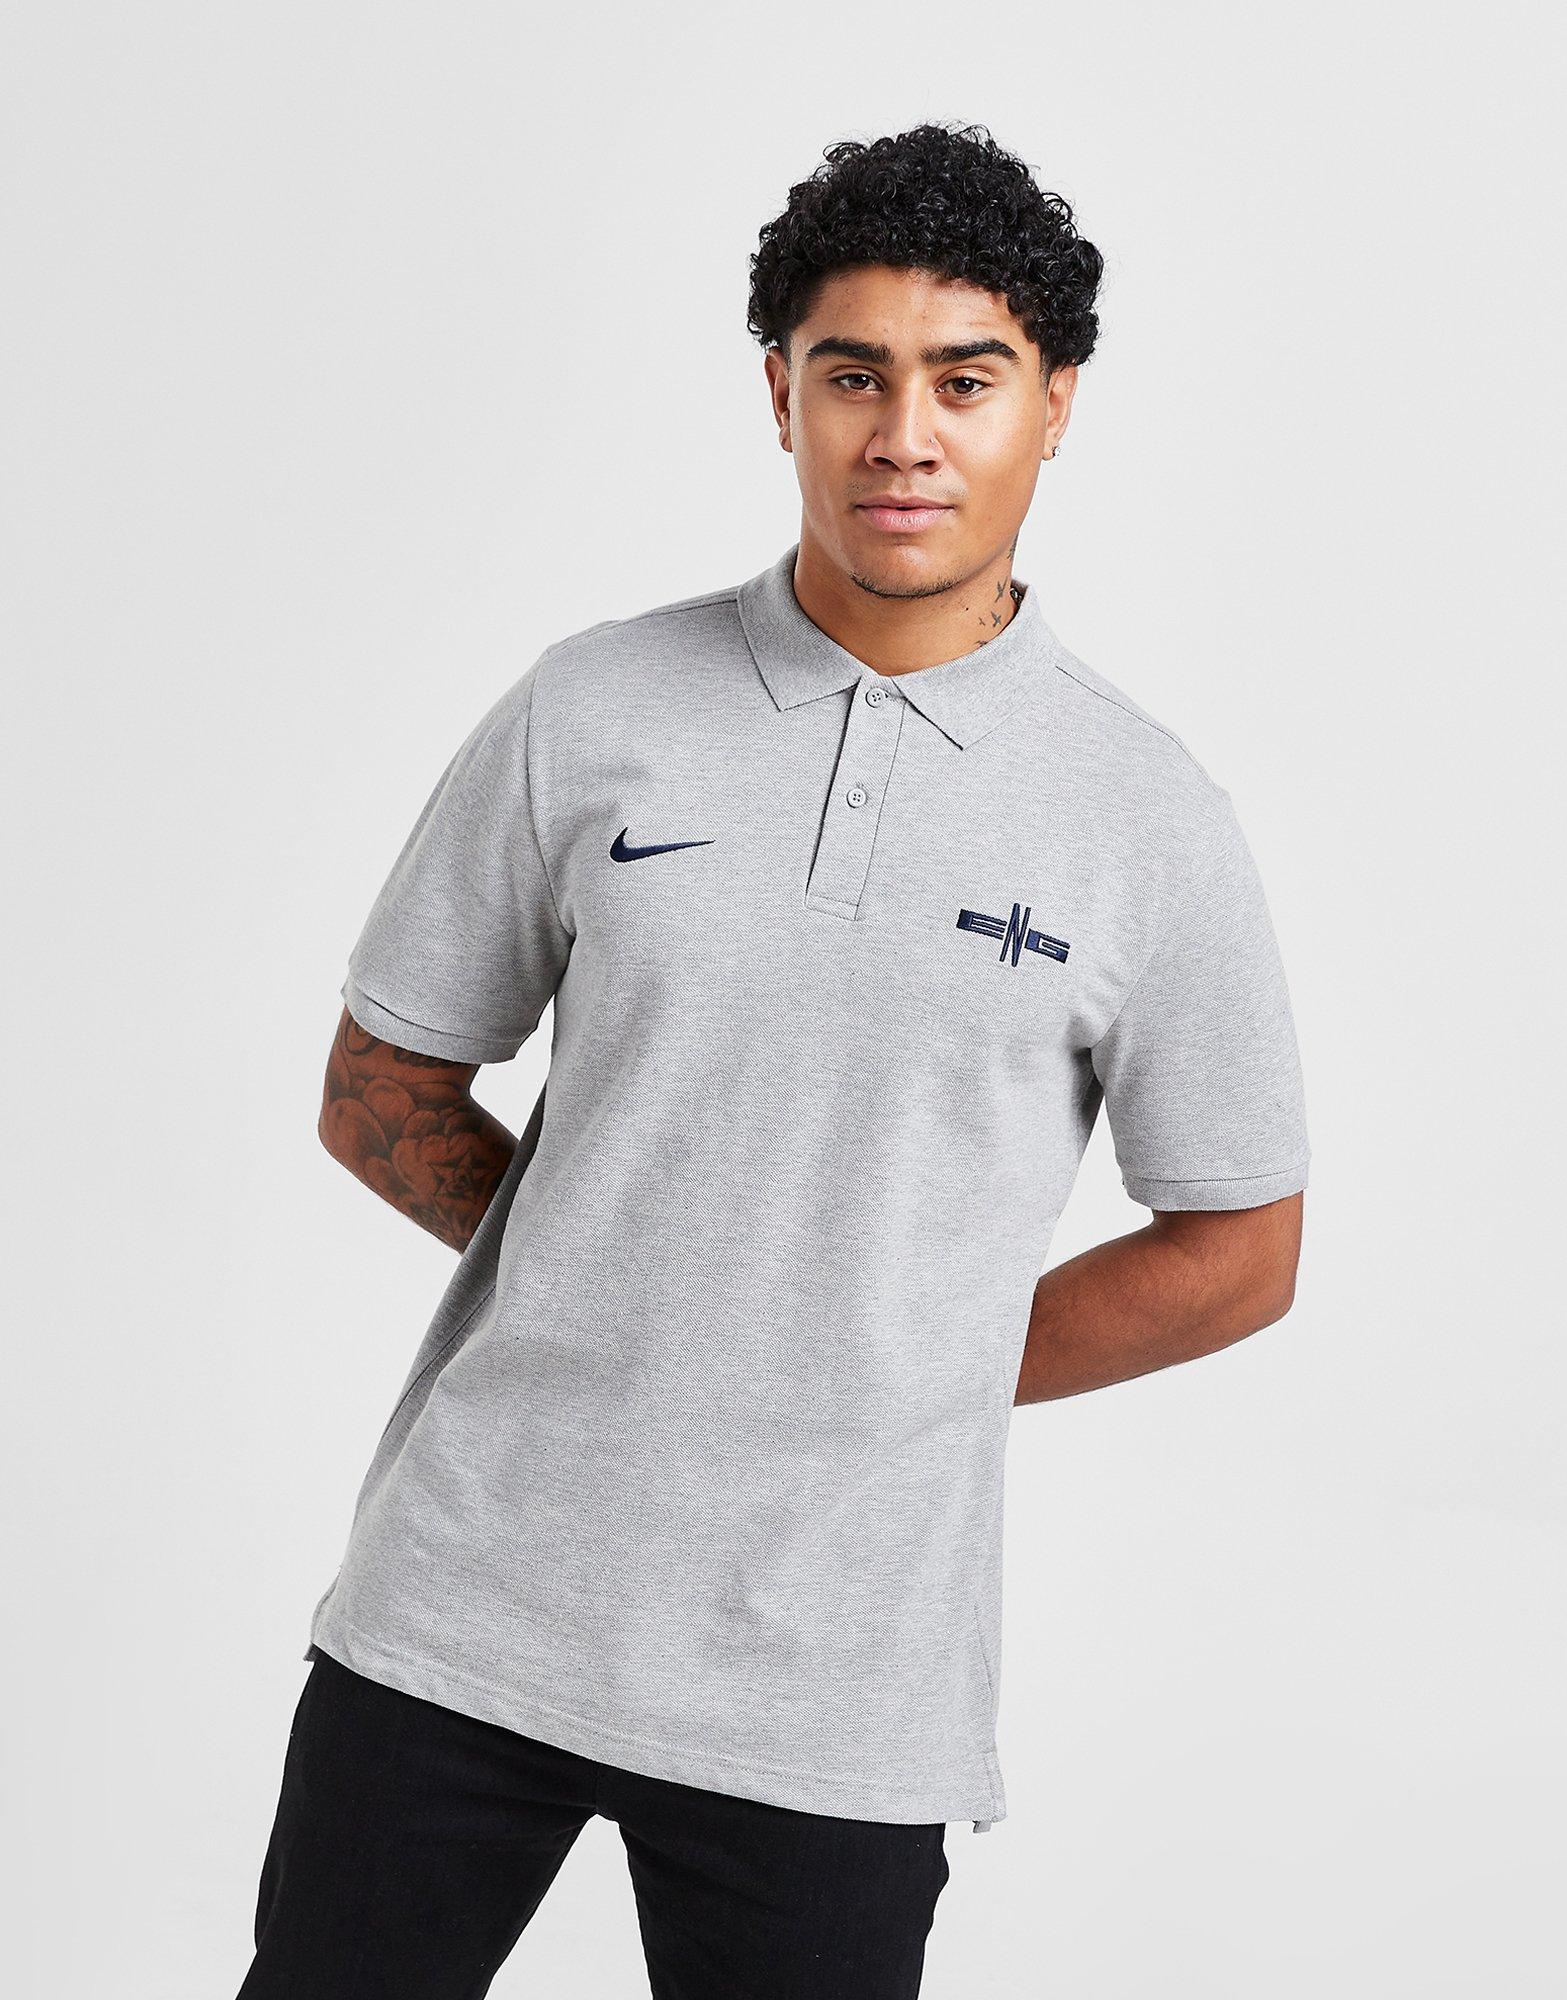 Fragante Ocurrir En marcha Nike England Sportswear Polo Shirt en Gris | JD Sports España